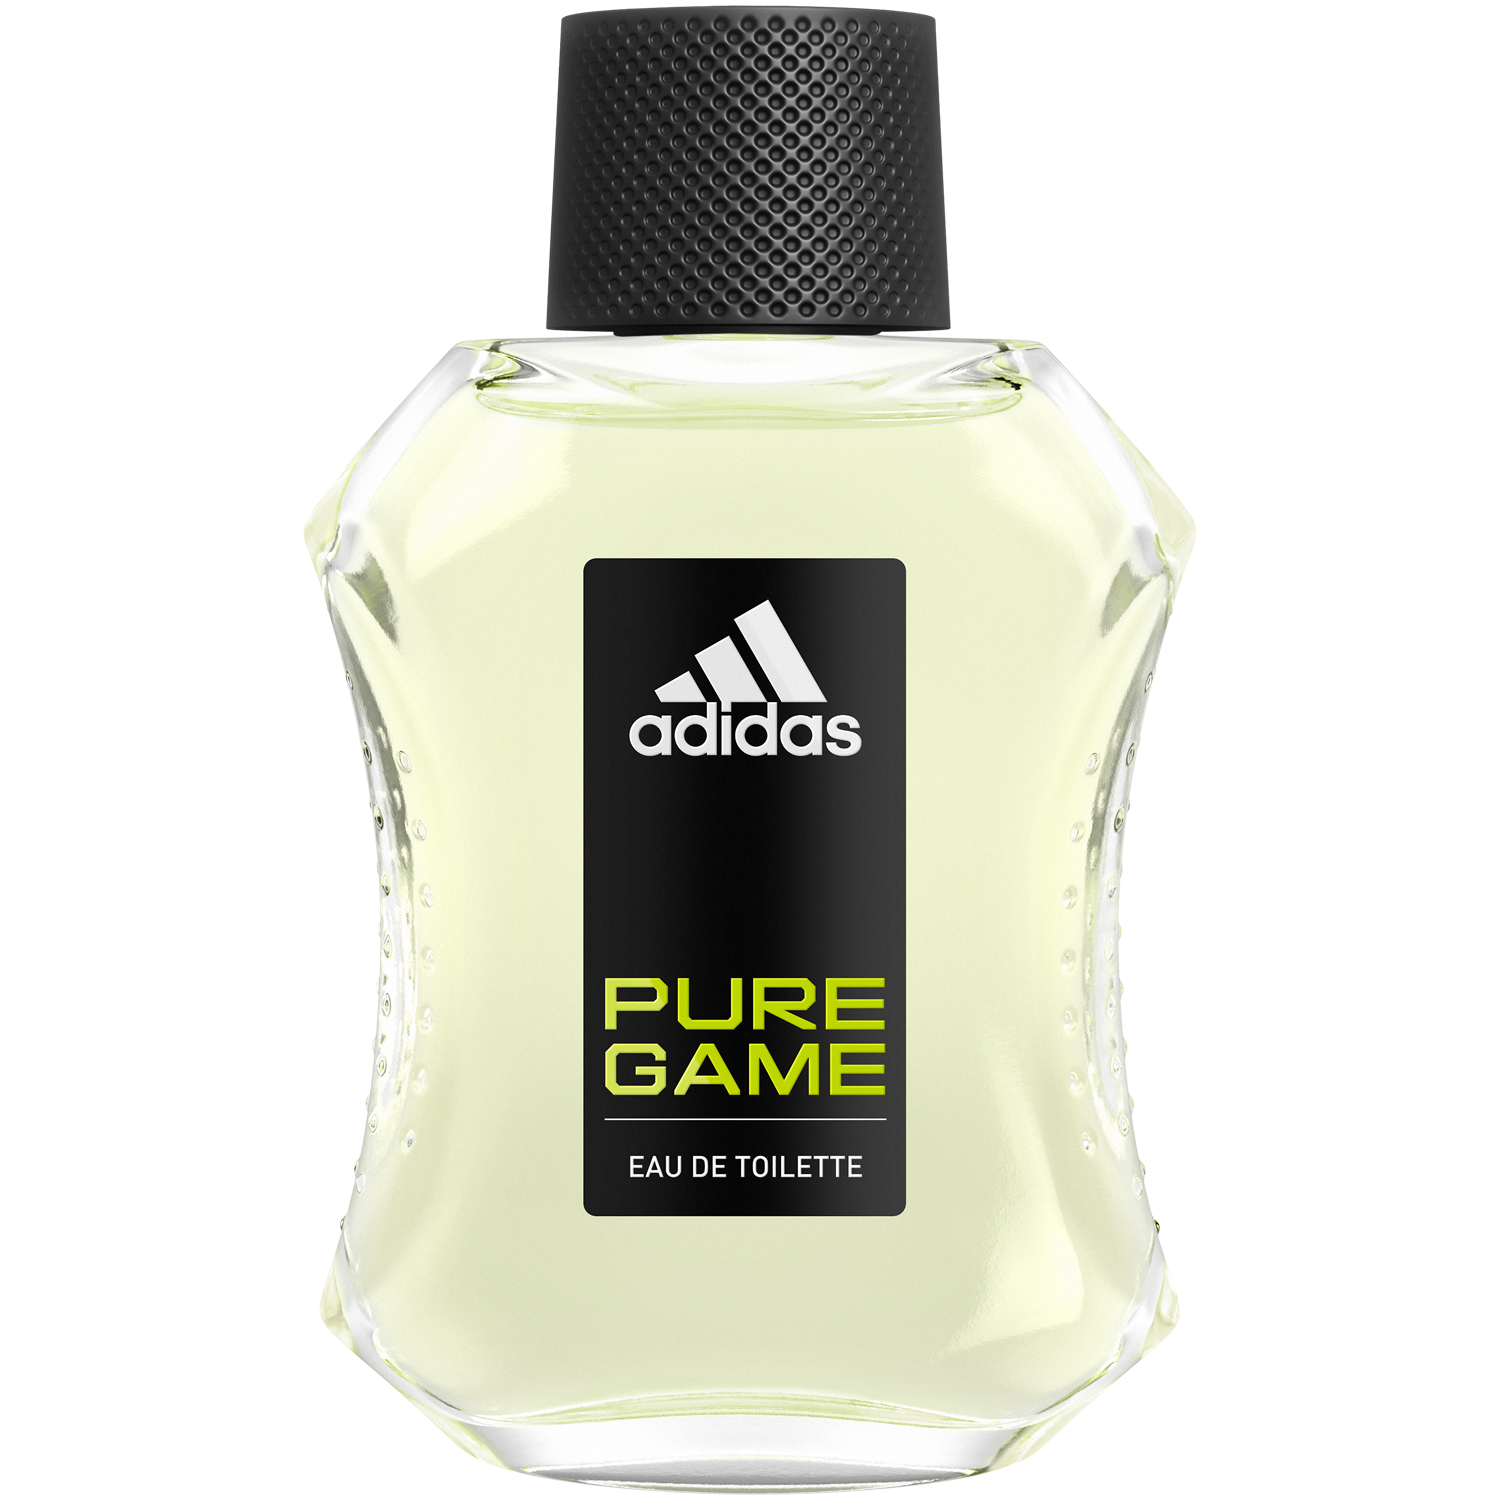 Adidas Pure Game туалетная вода для мужчин, 100 мл